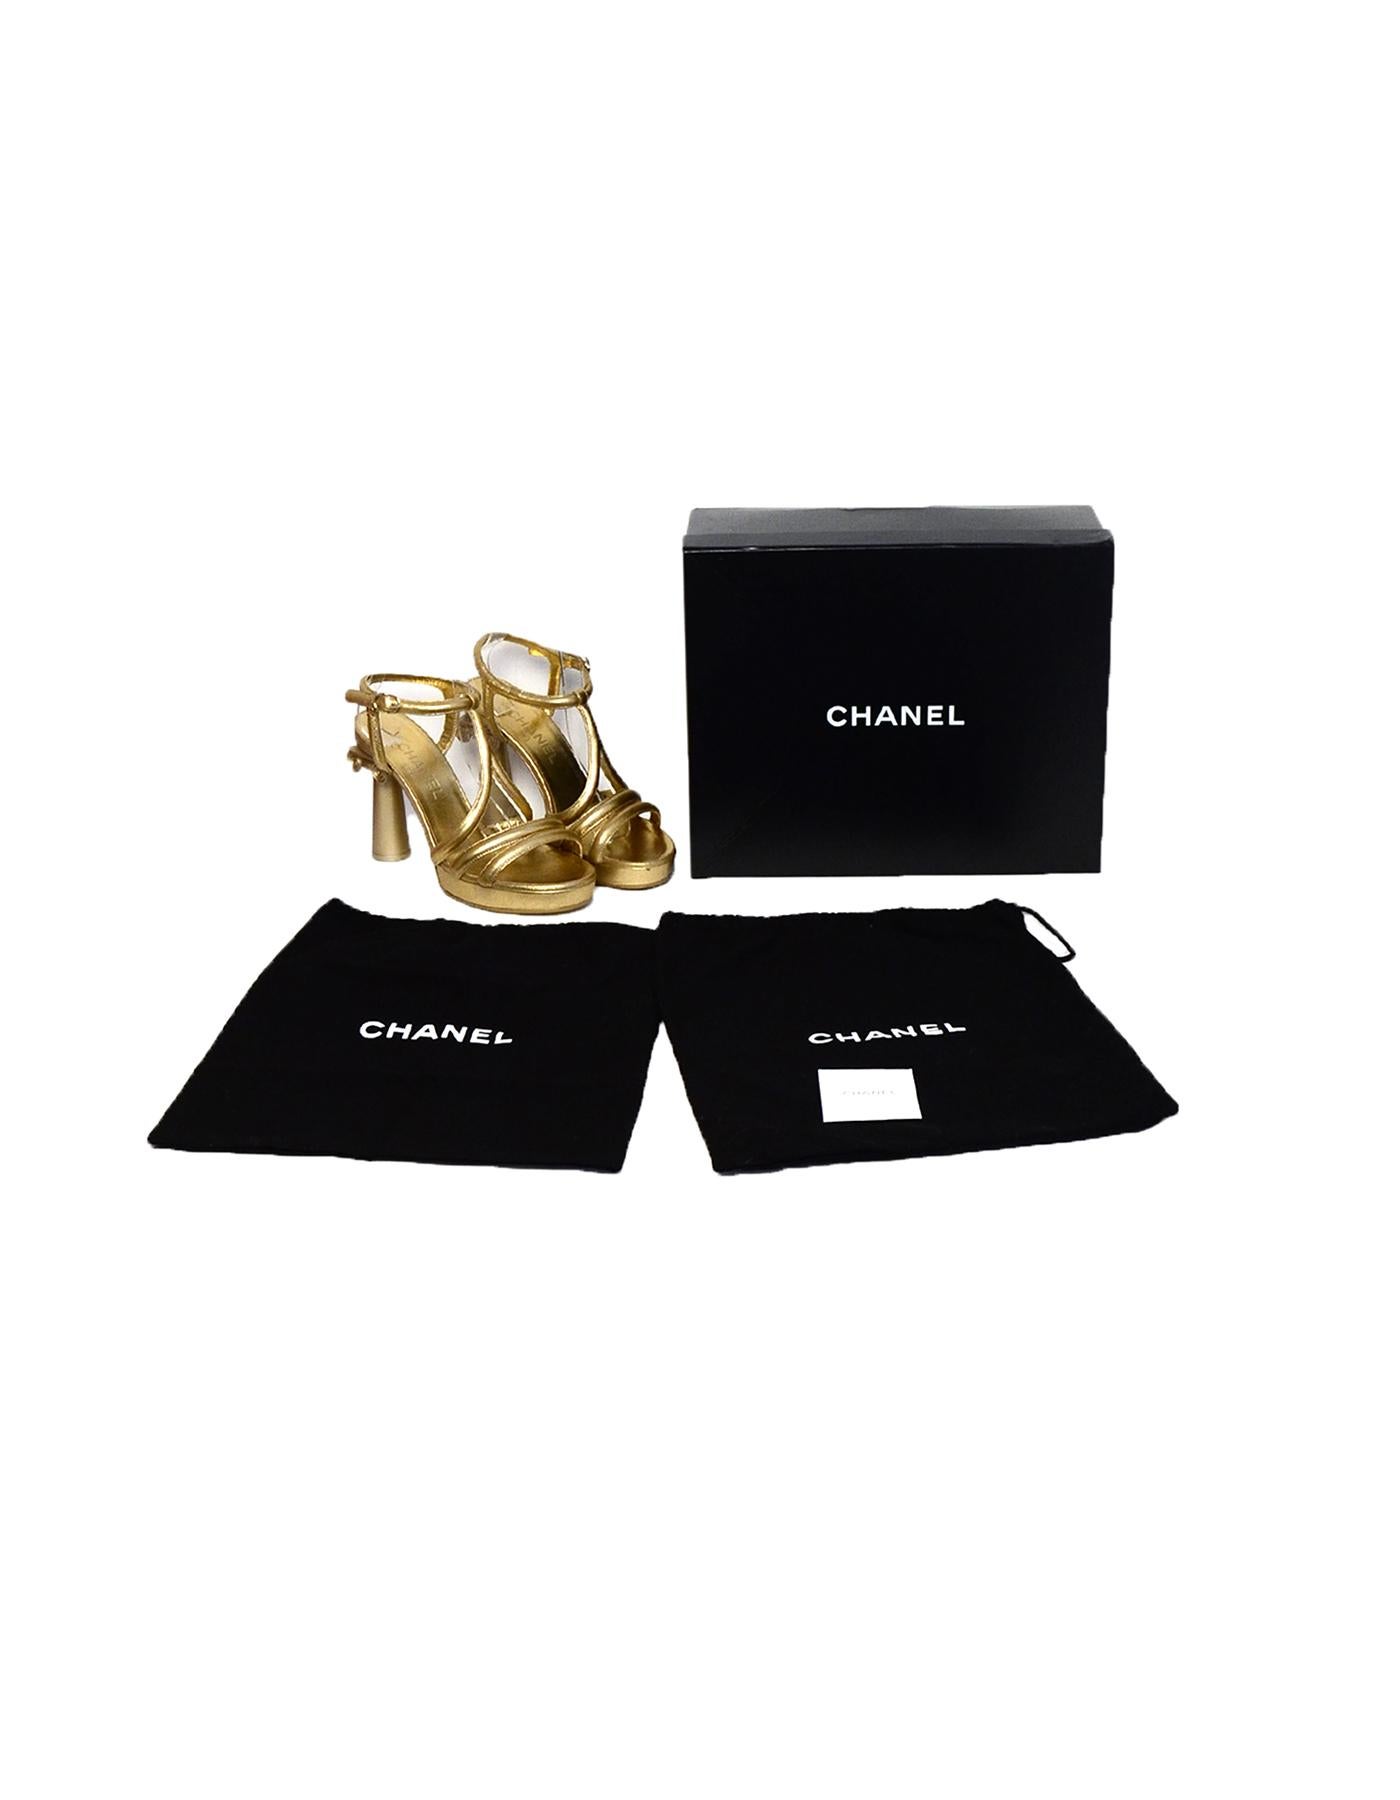 Chanel Gold Parthenon Grecian Column Platform Sandals sz 38 1